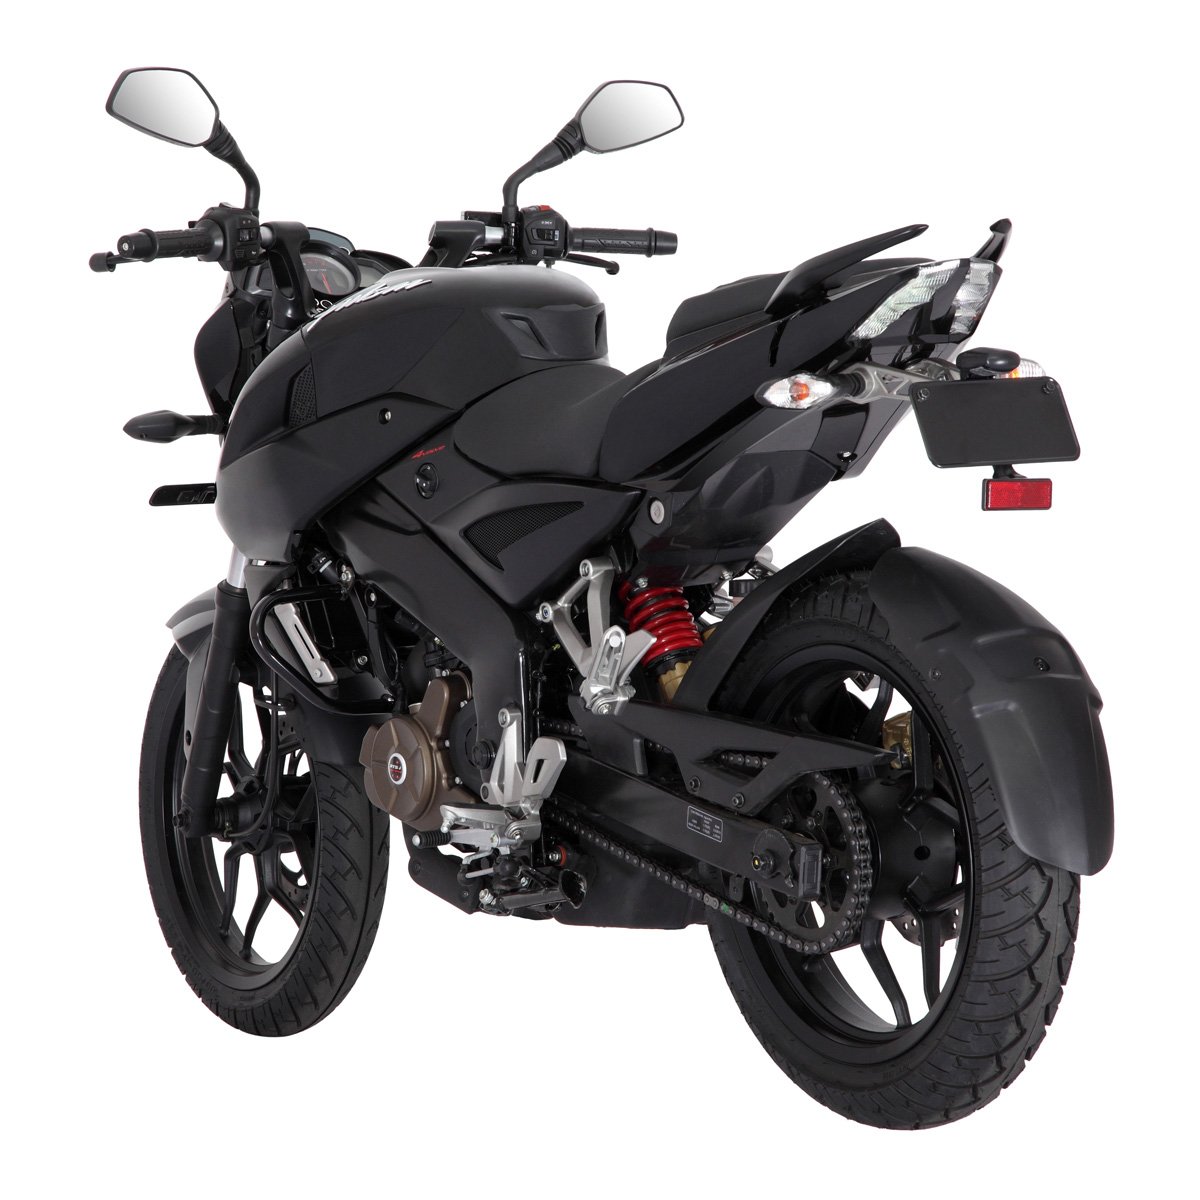 Motocicleta Pulsar 200 Ns Negra Bajaj